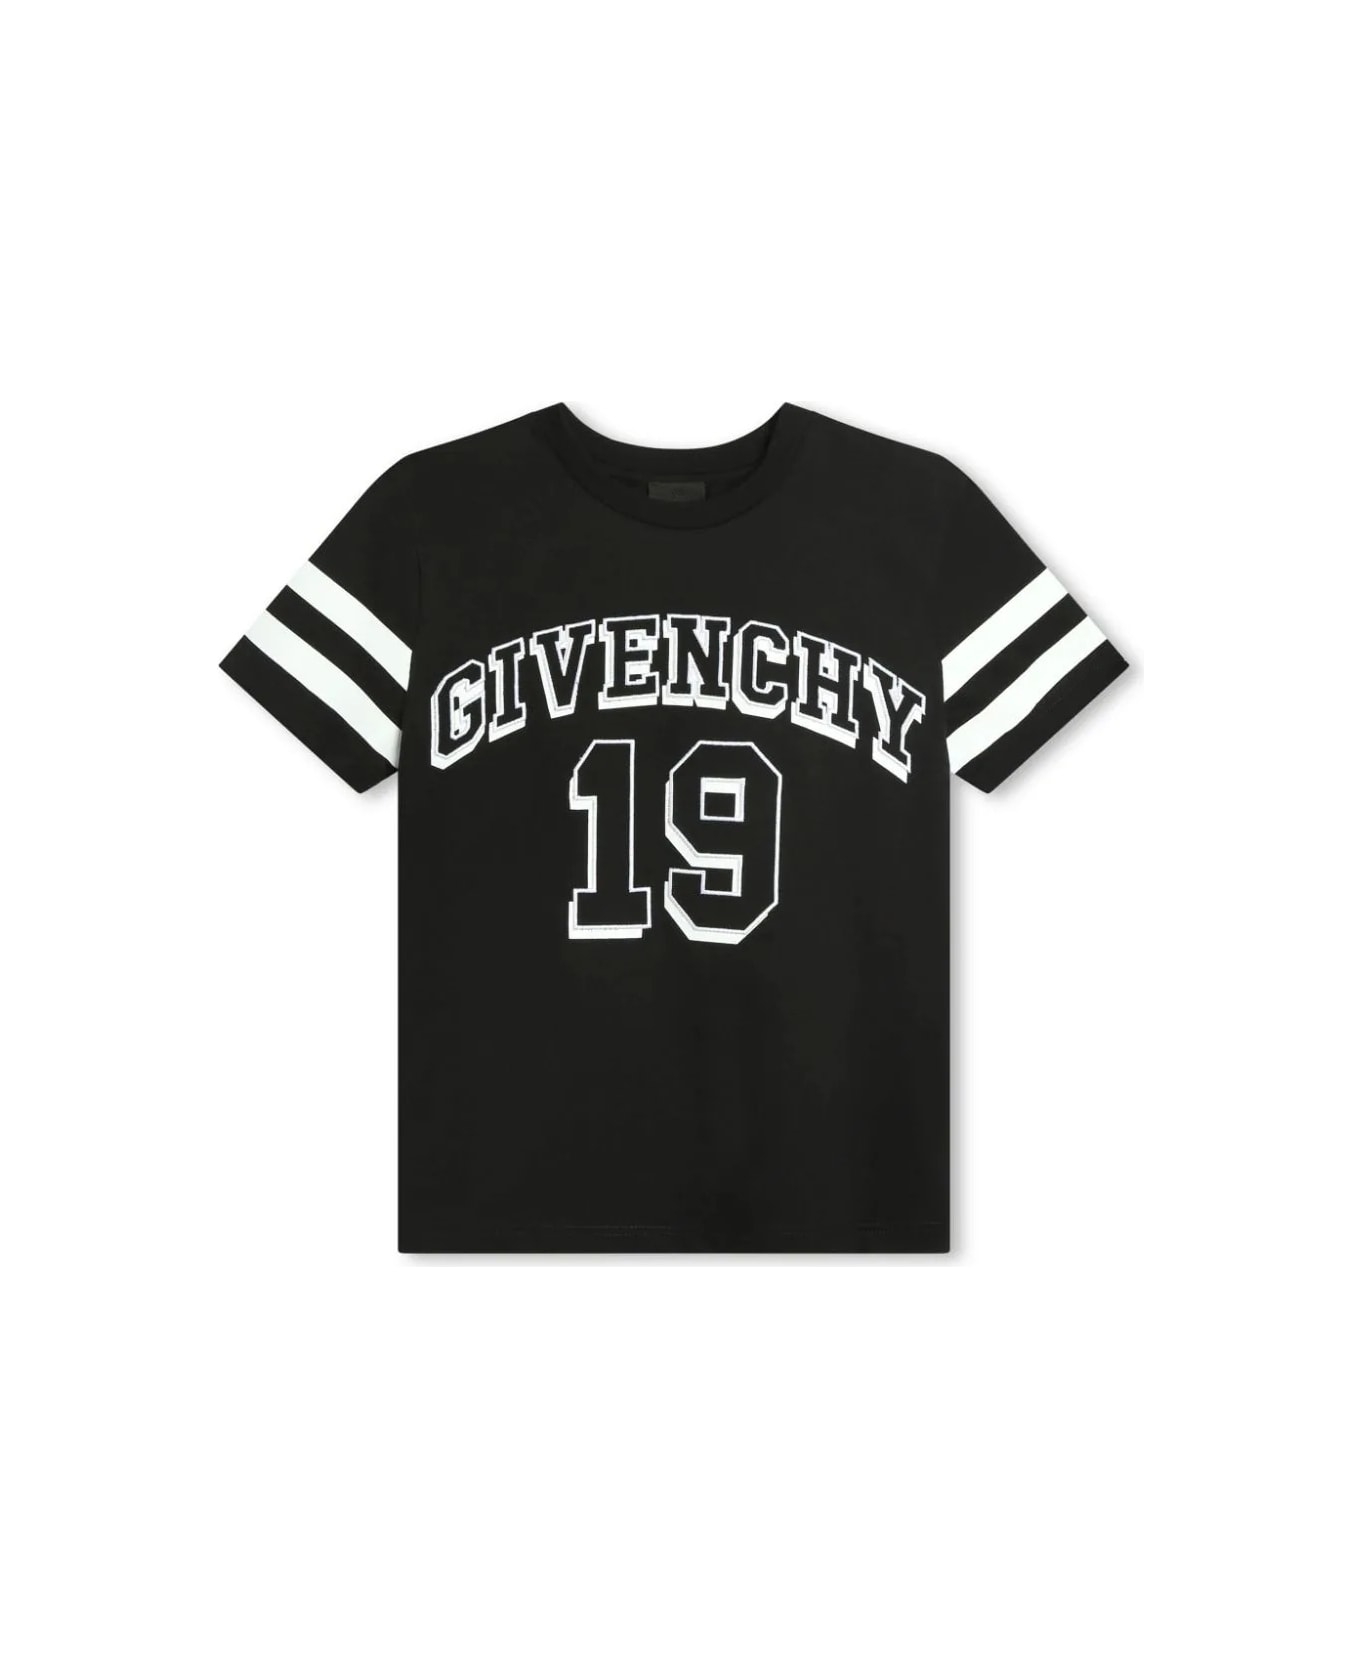 Givenchy Black Givenchy 4g 1952 T-shirt - Black